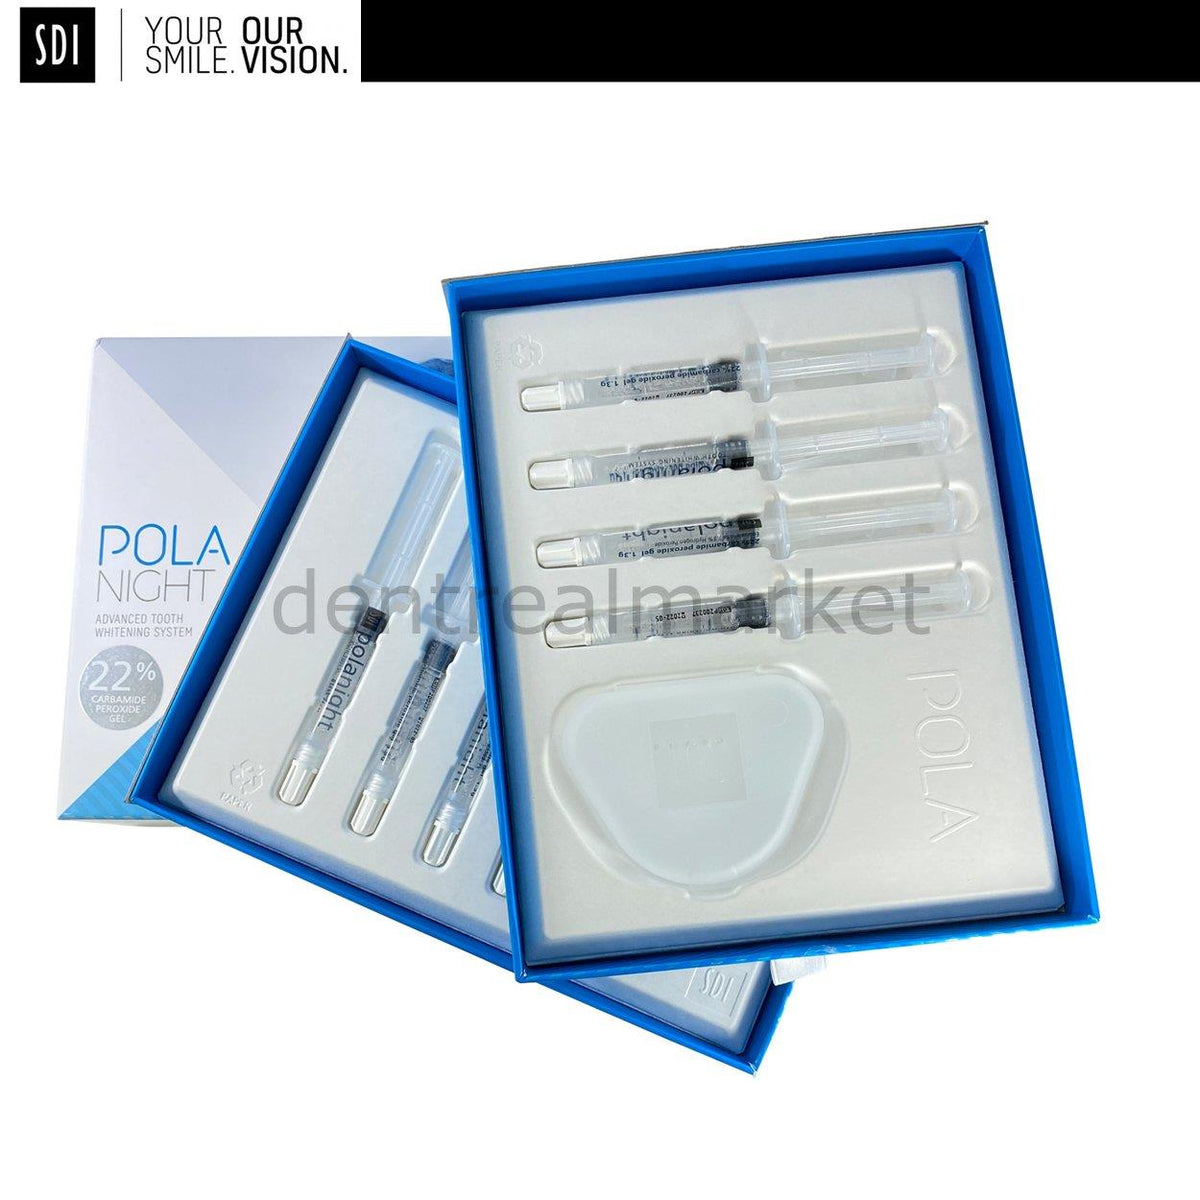 DentrealStore - Sdi Dental Pola Night 22% CP- Home Teeth Whitening - 10*1.3g